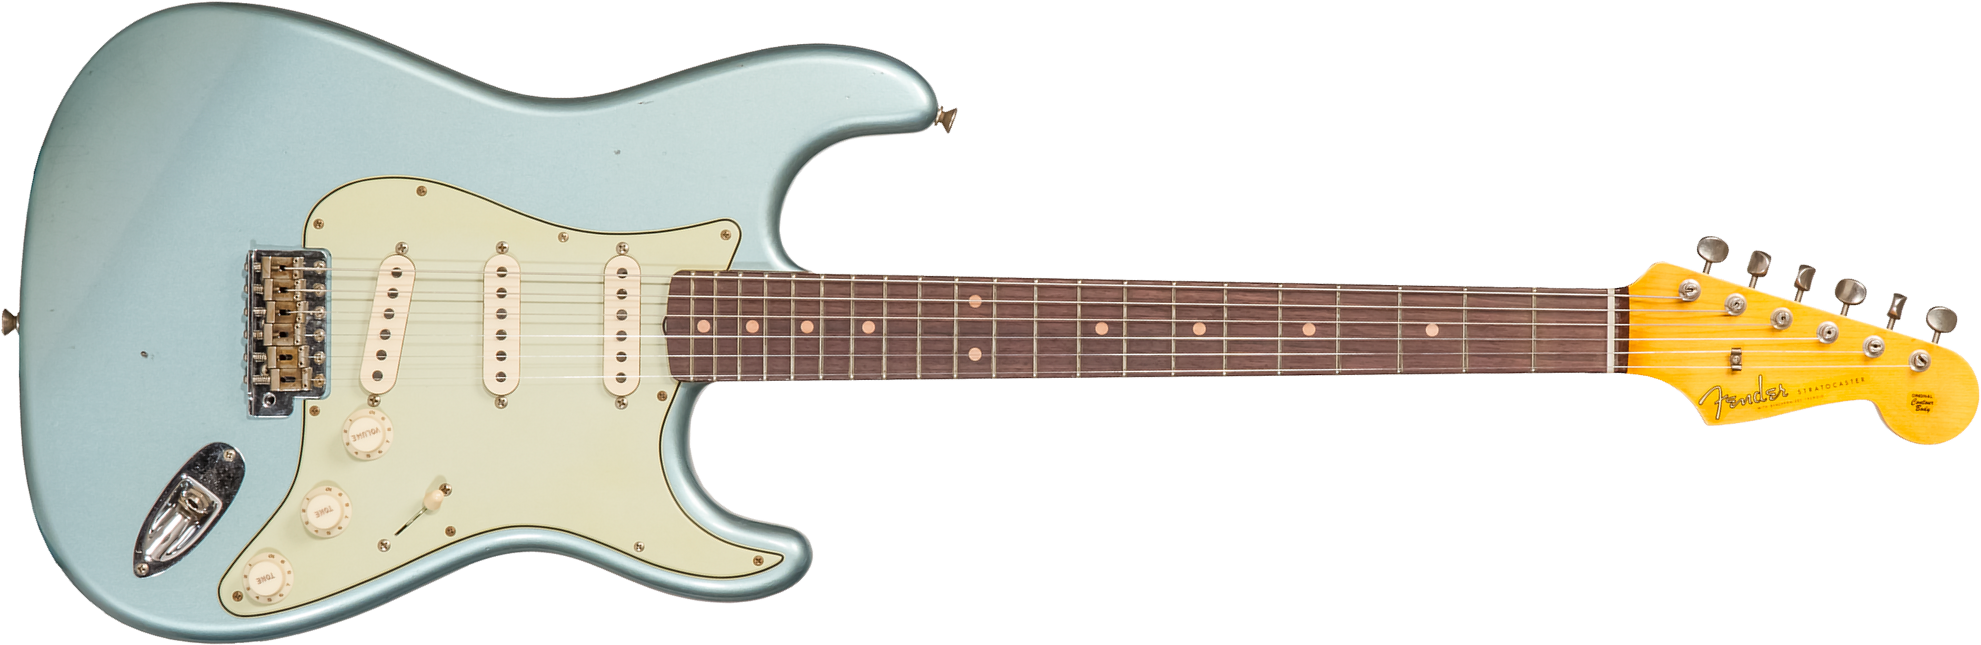 Fender Custom Shop Strat 1959 3s Trem Rw #cz570883 - Journeyman Relic Teal Green Metallic - Str shape electric guitar - Main picture